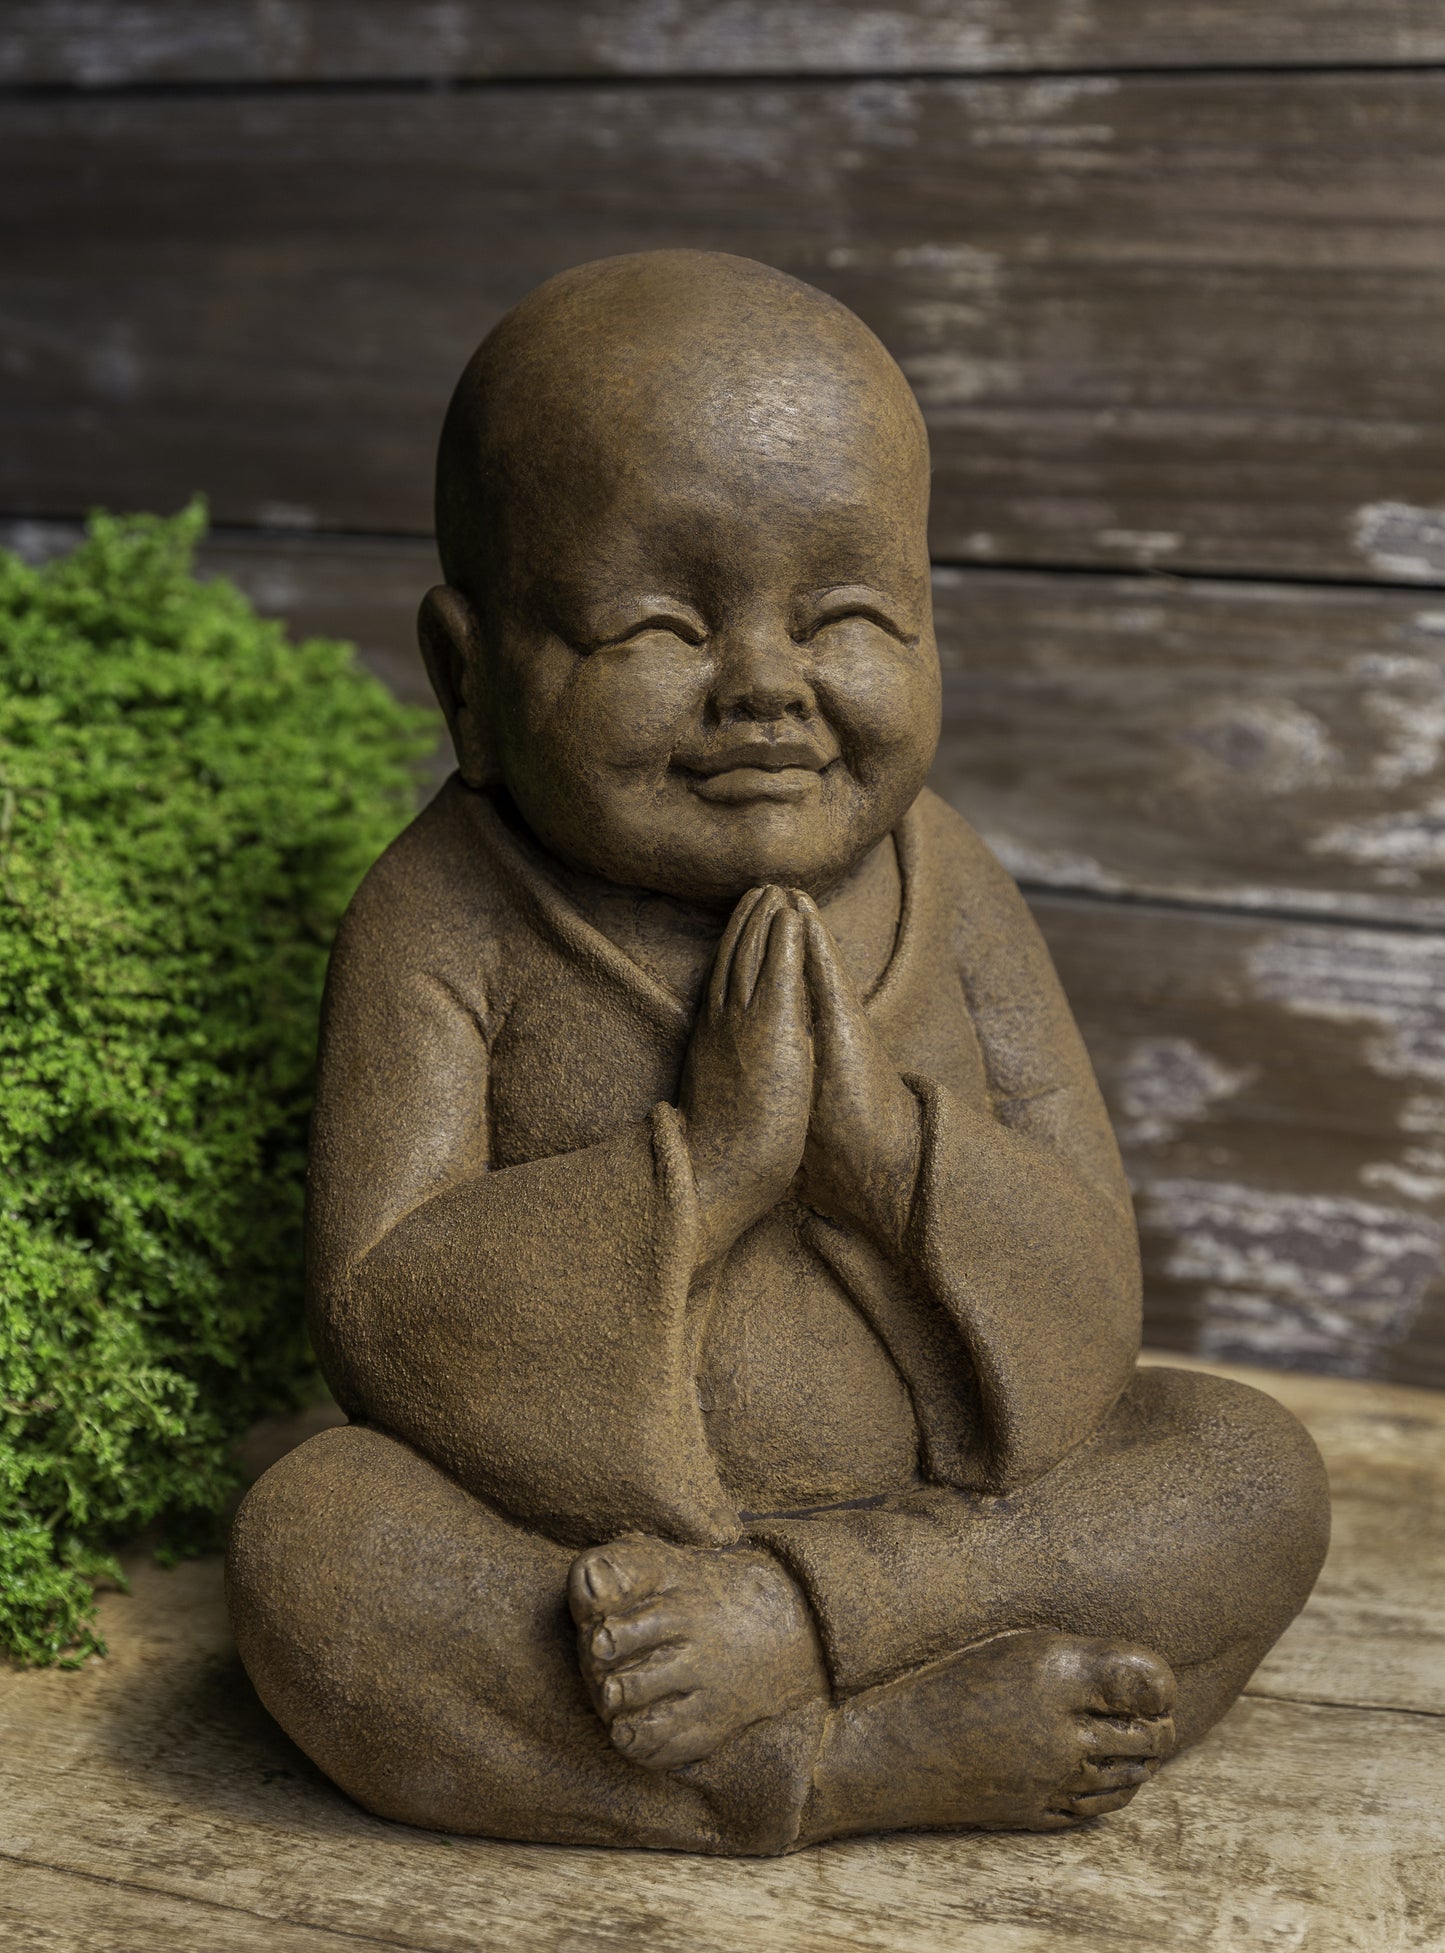 Smiling Monk Garden Statue